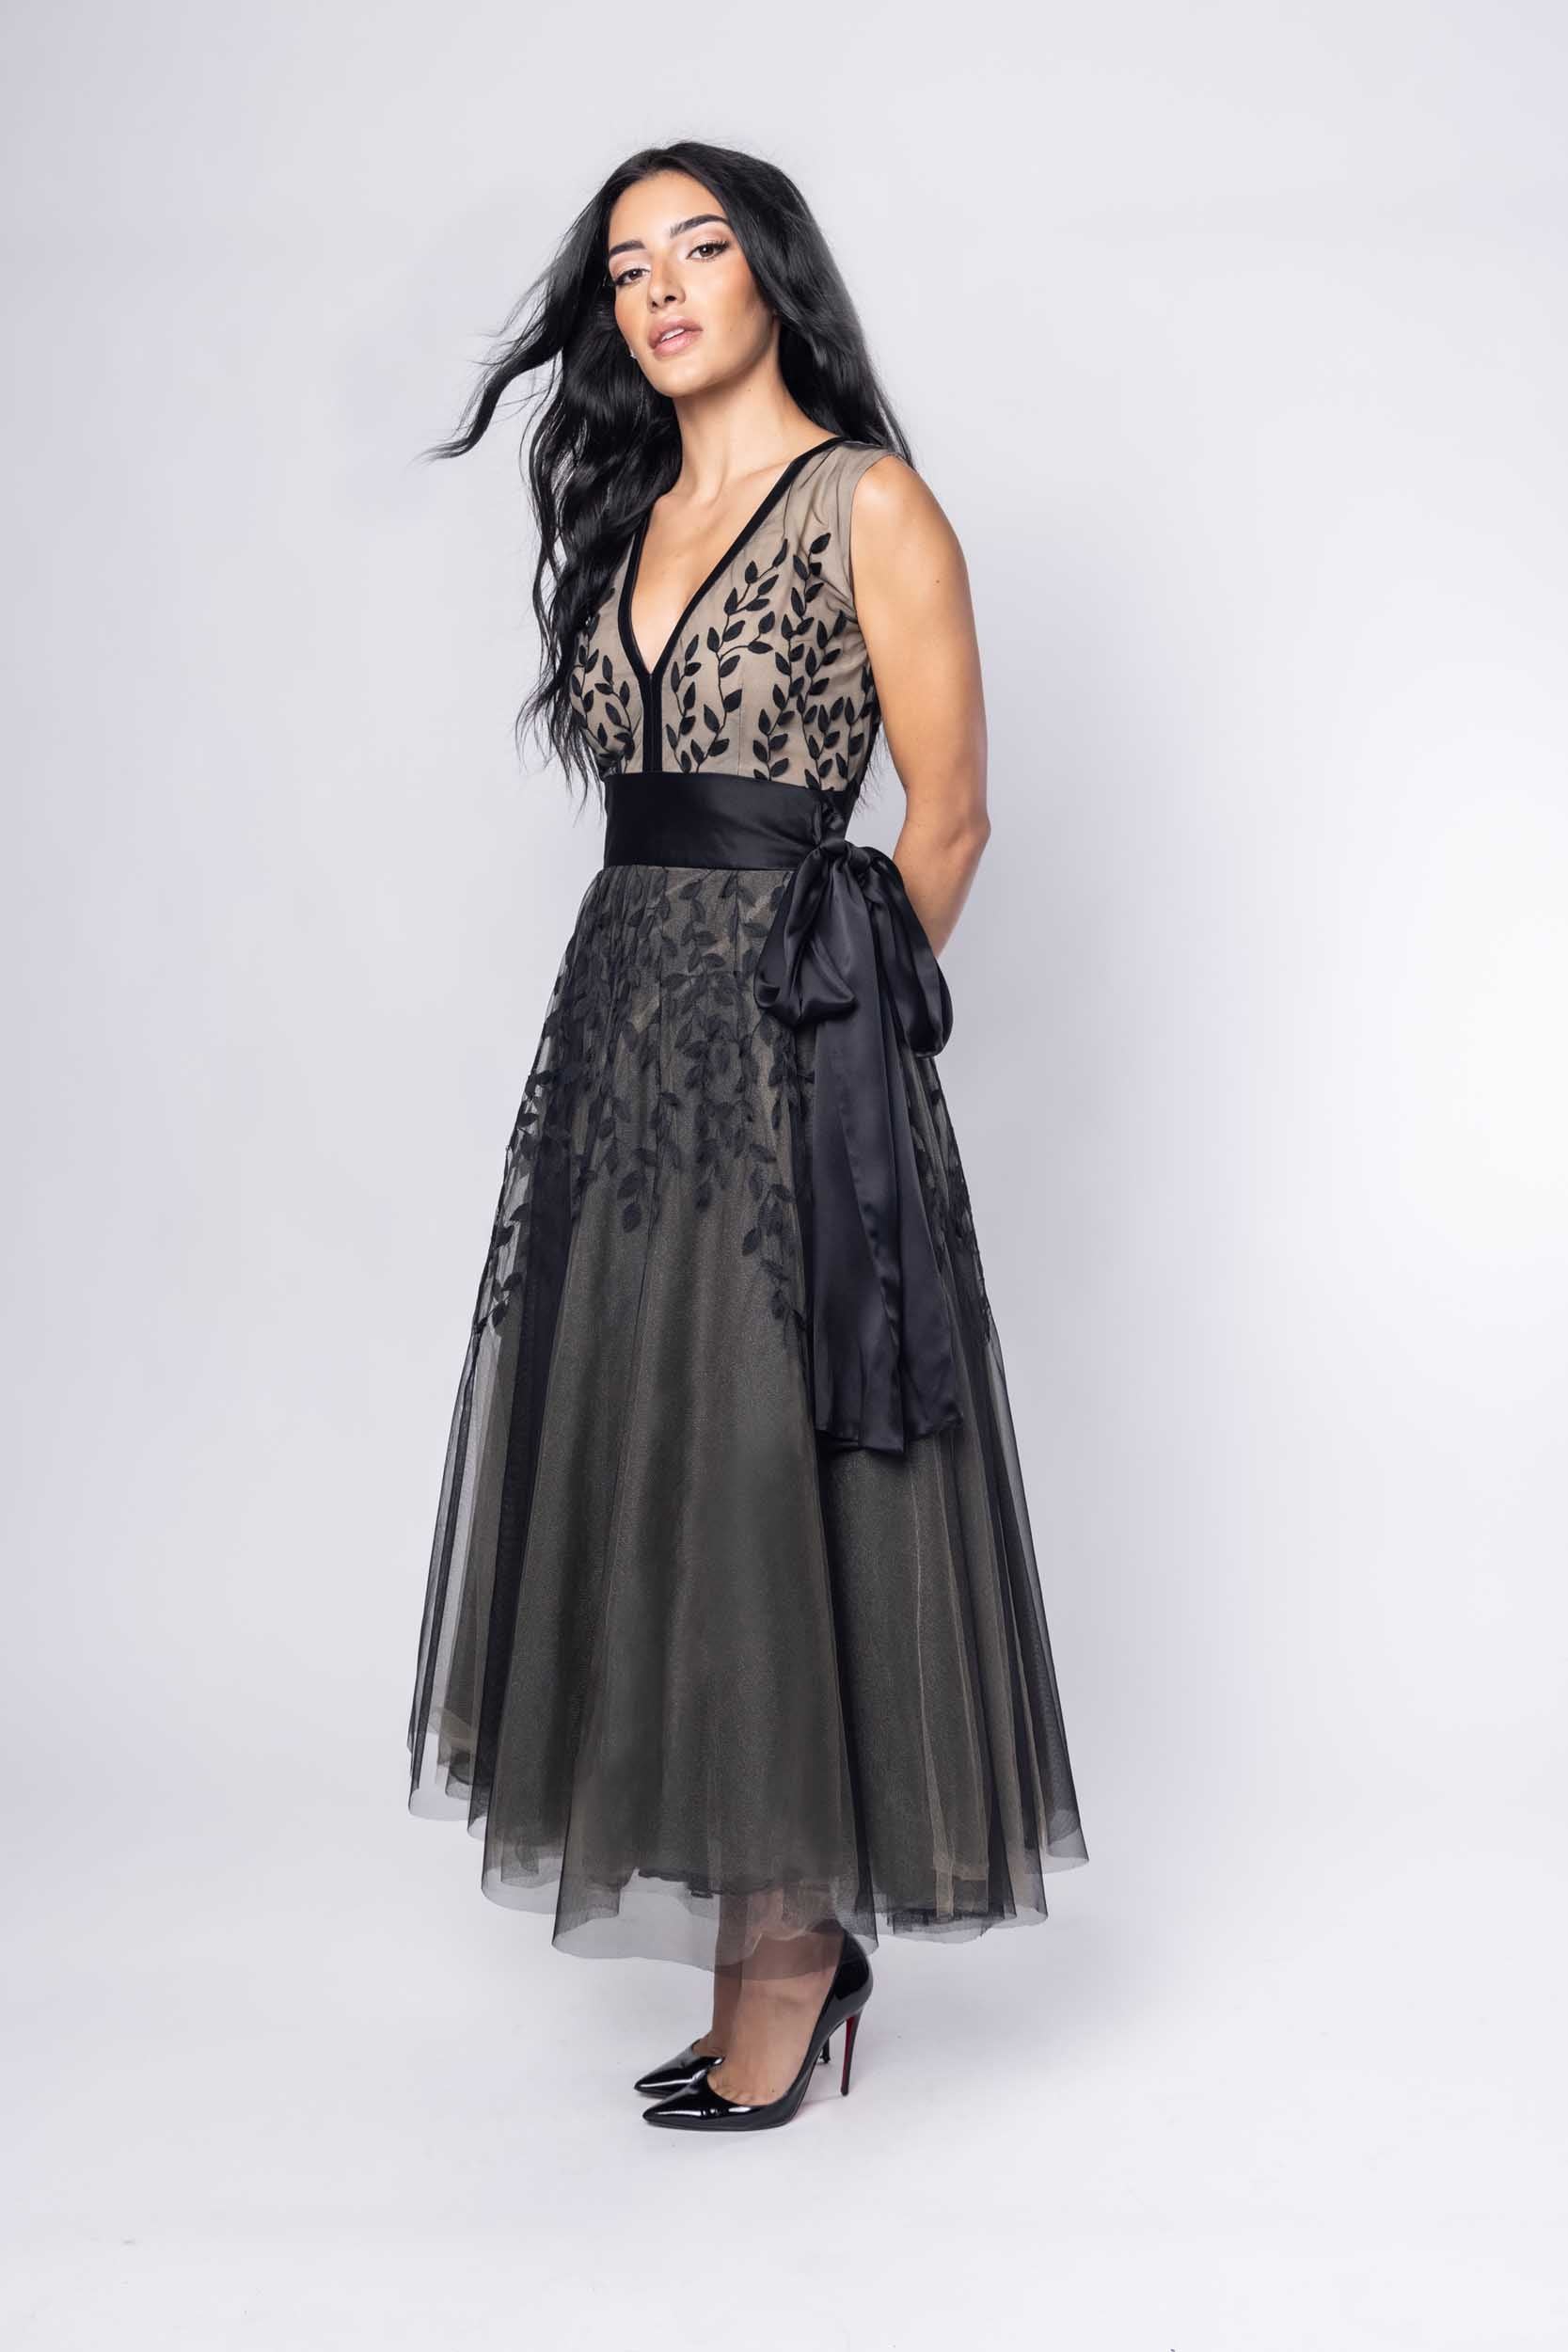 Beautiful model in an ornate black tea-length Sujata Gazder dress - side view